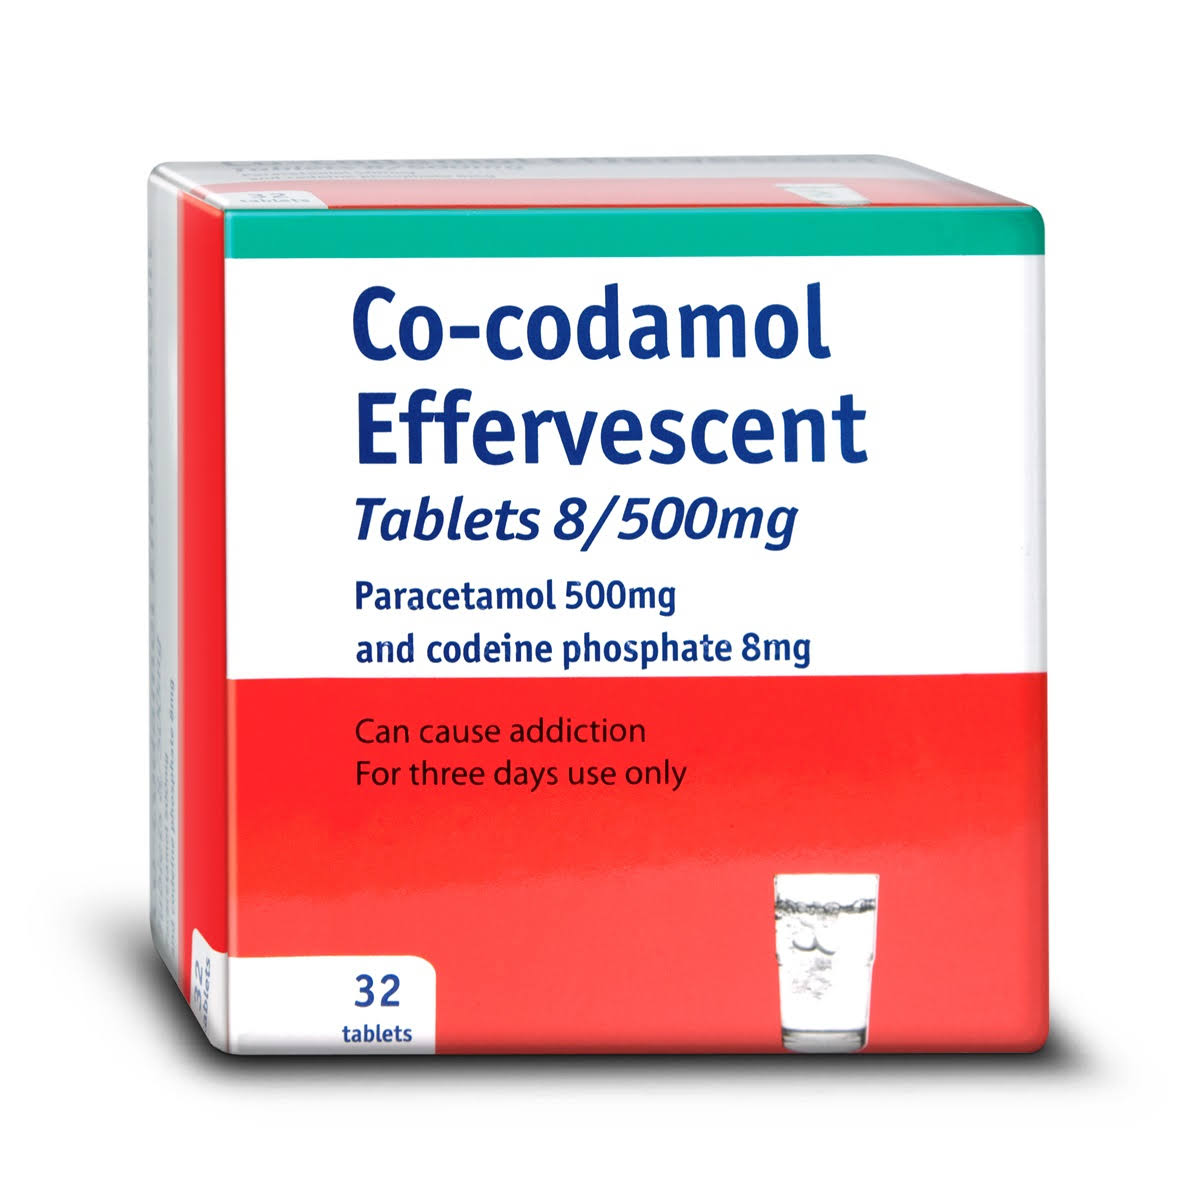 Numark Medicinal Products Co-codamol Effervescent Tablets - 32ct